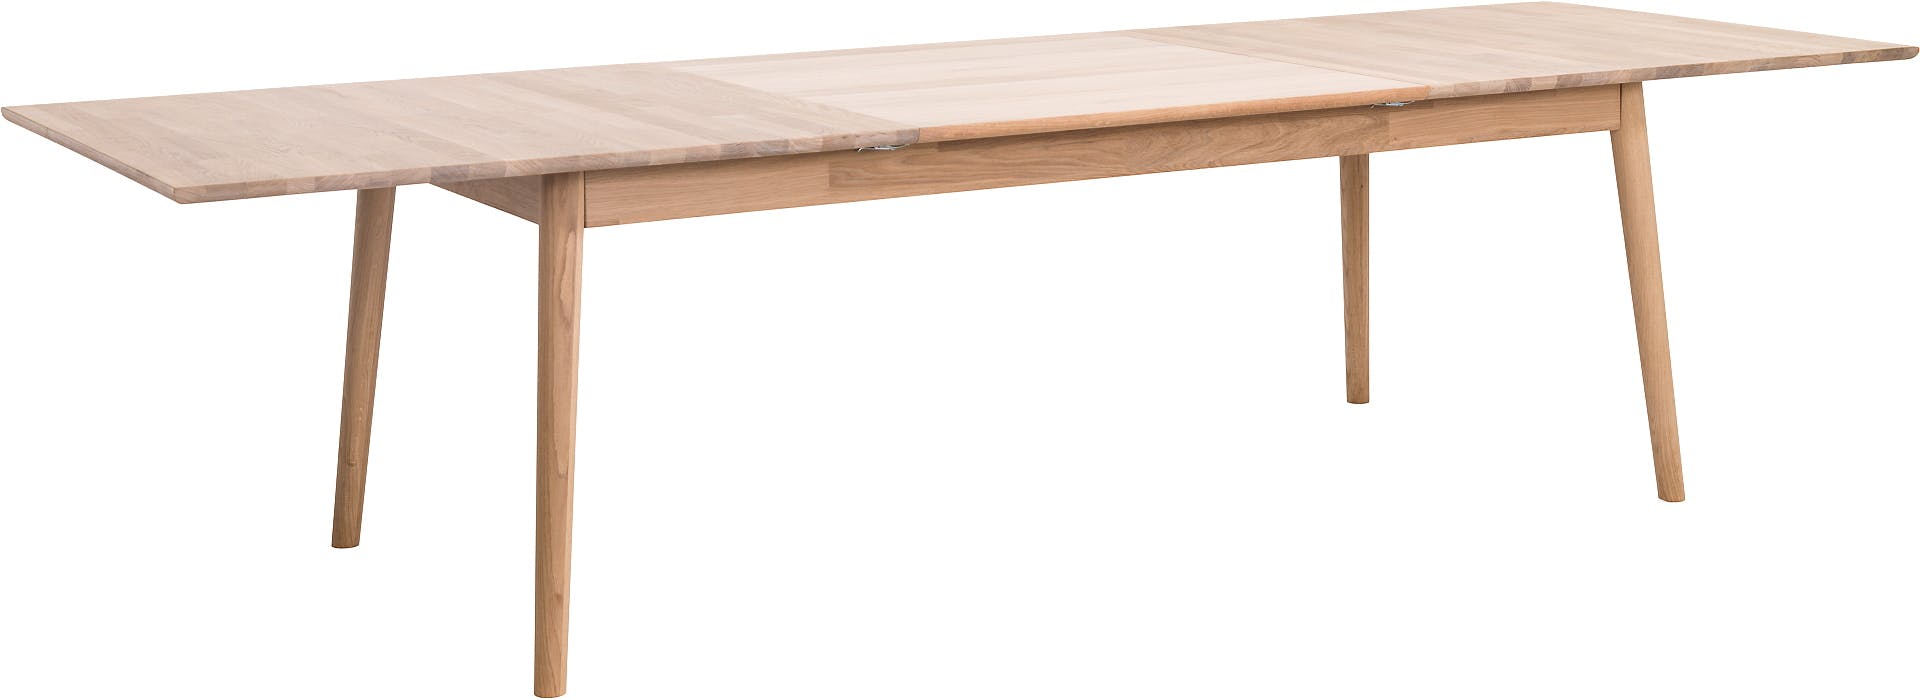 Linden spisebord 210 - 300 x 100 cm